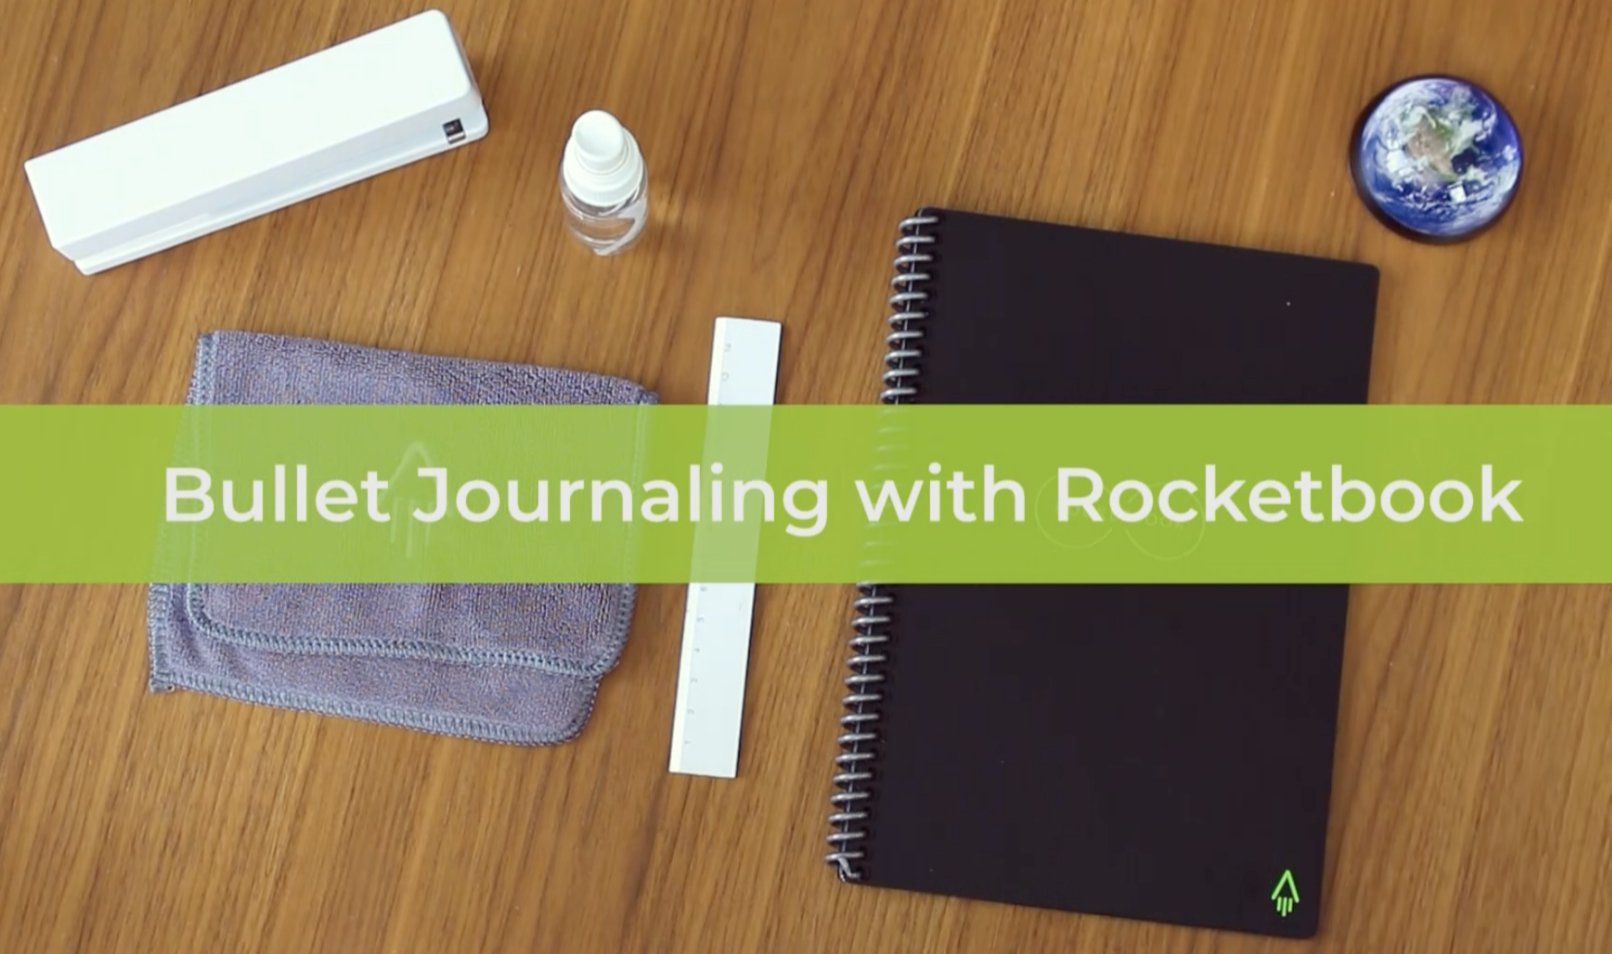 Video Tutorial: 6 Steps to Begin Bullet Journaling - Rocketbook Australia